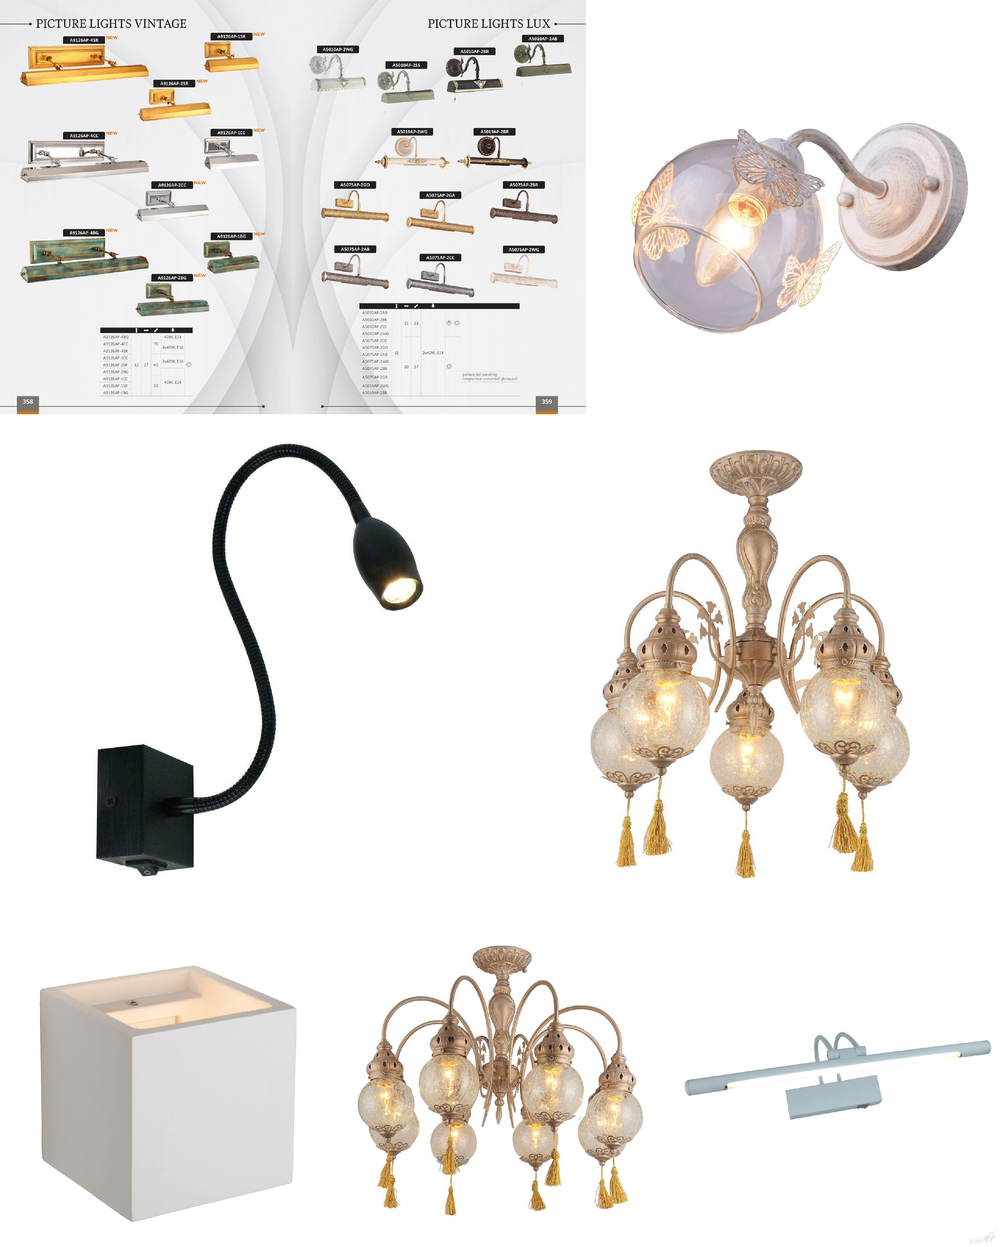 « для картин». Arte Lamp серия Picture Lights Lux артикул A5019AP-2BR